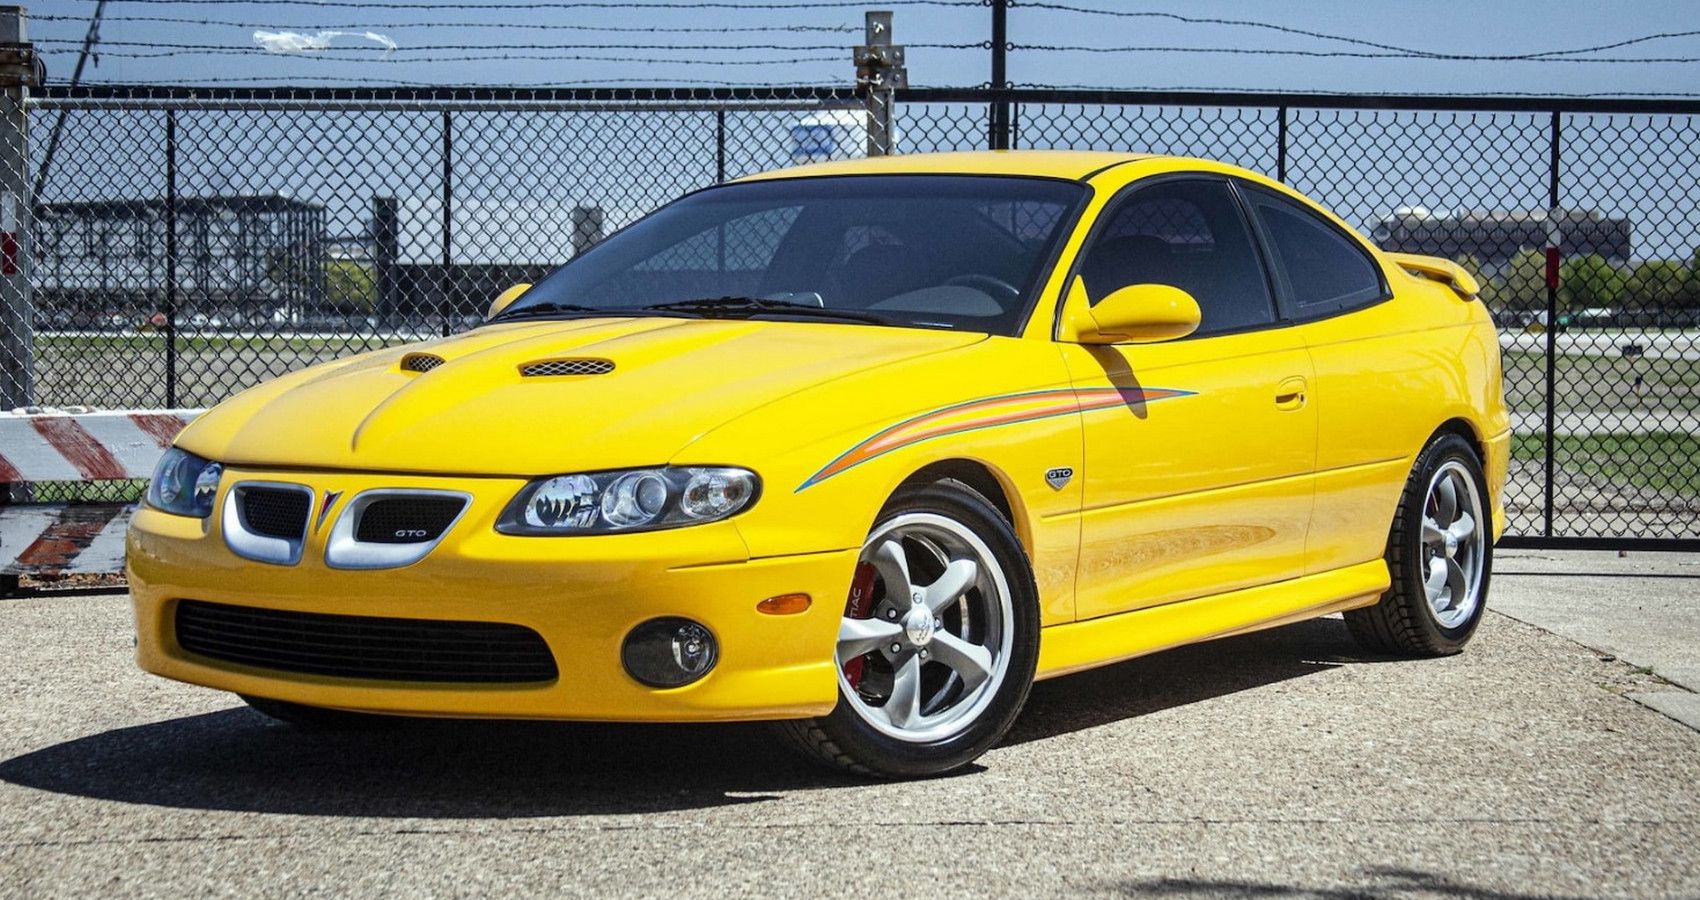 Yellow 2004 Pontiaco GTO Parked Outside